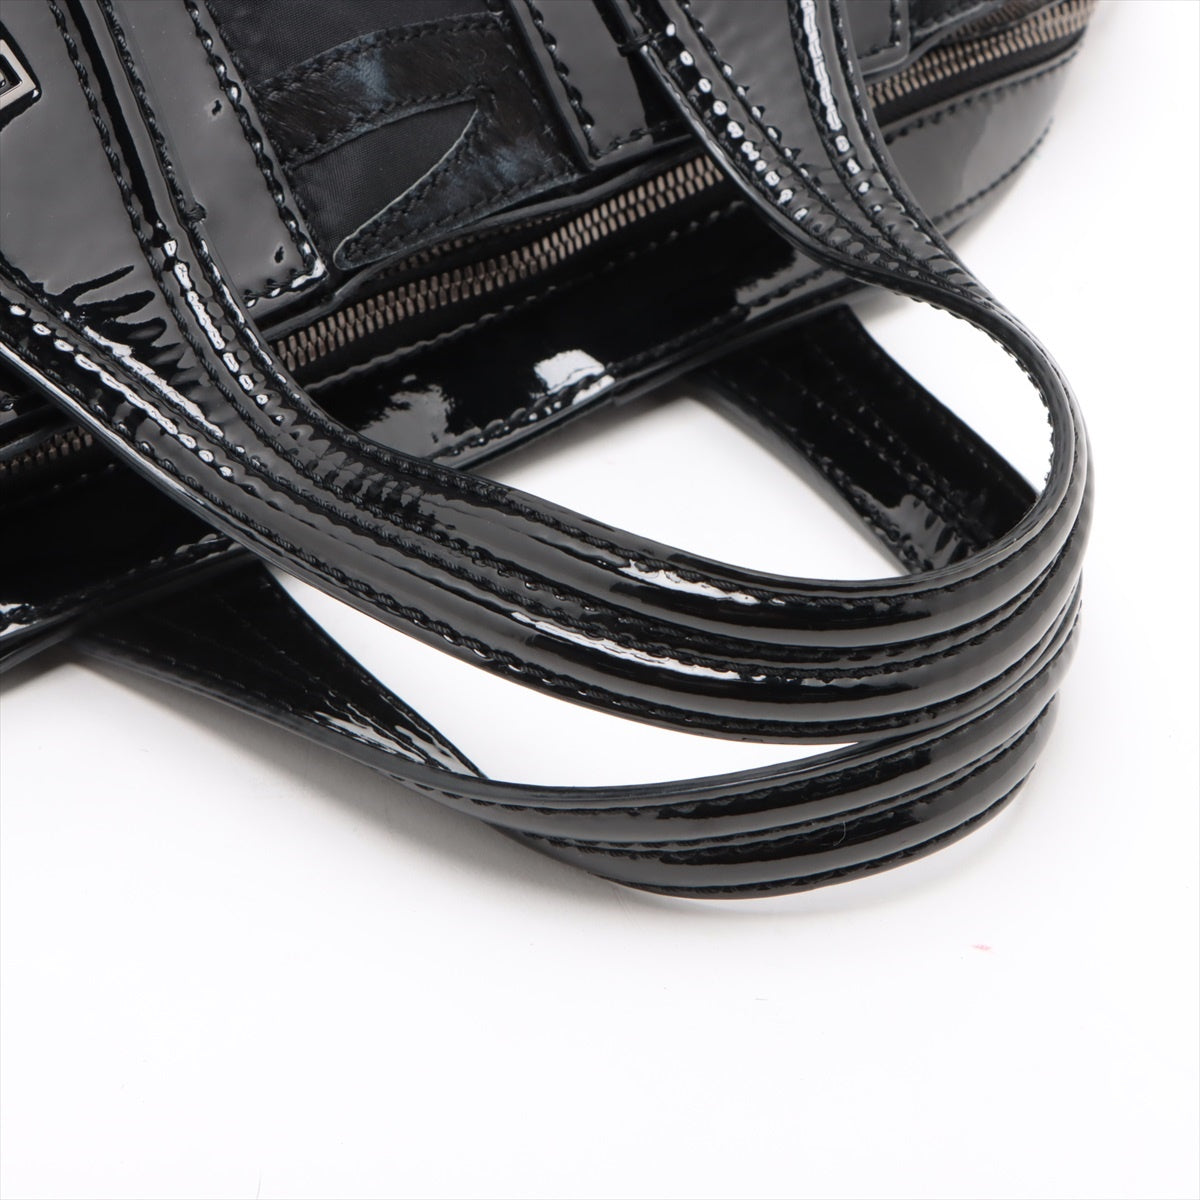 Givenchy Nightingale Nylon x Cowhide x Patent Leather 2way handbag Black